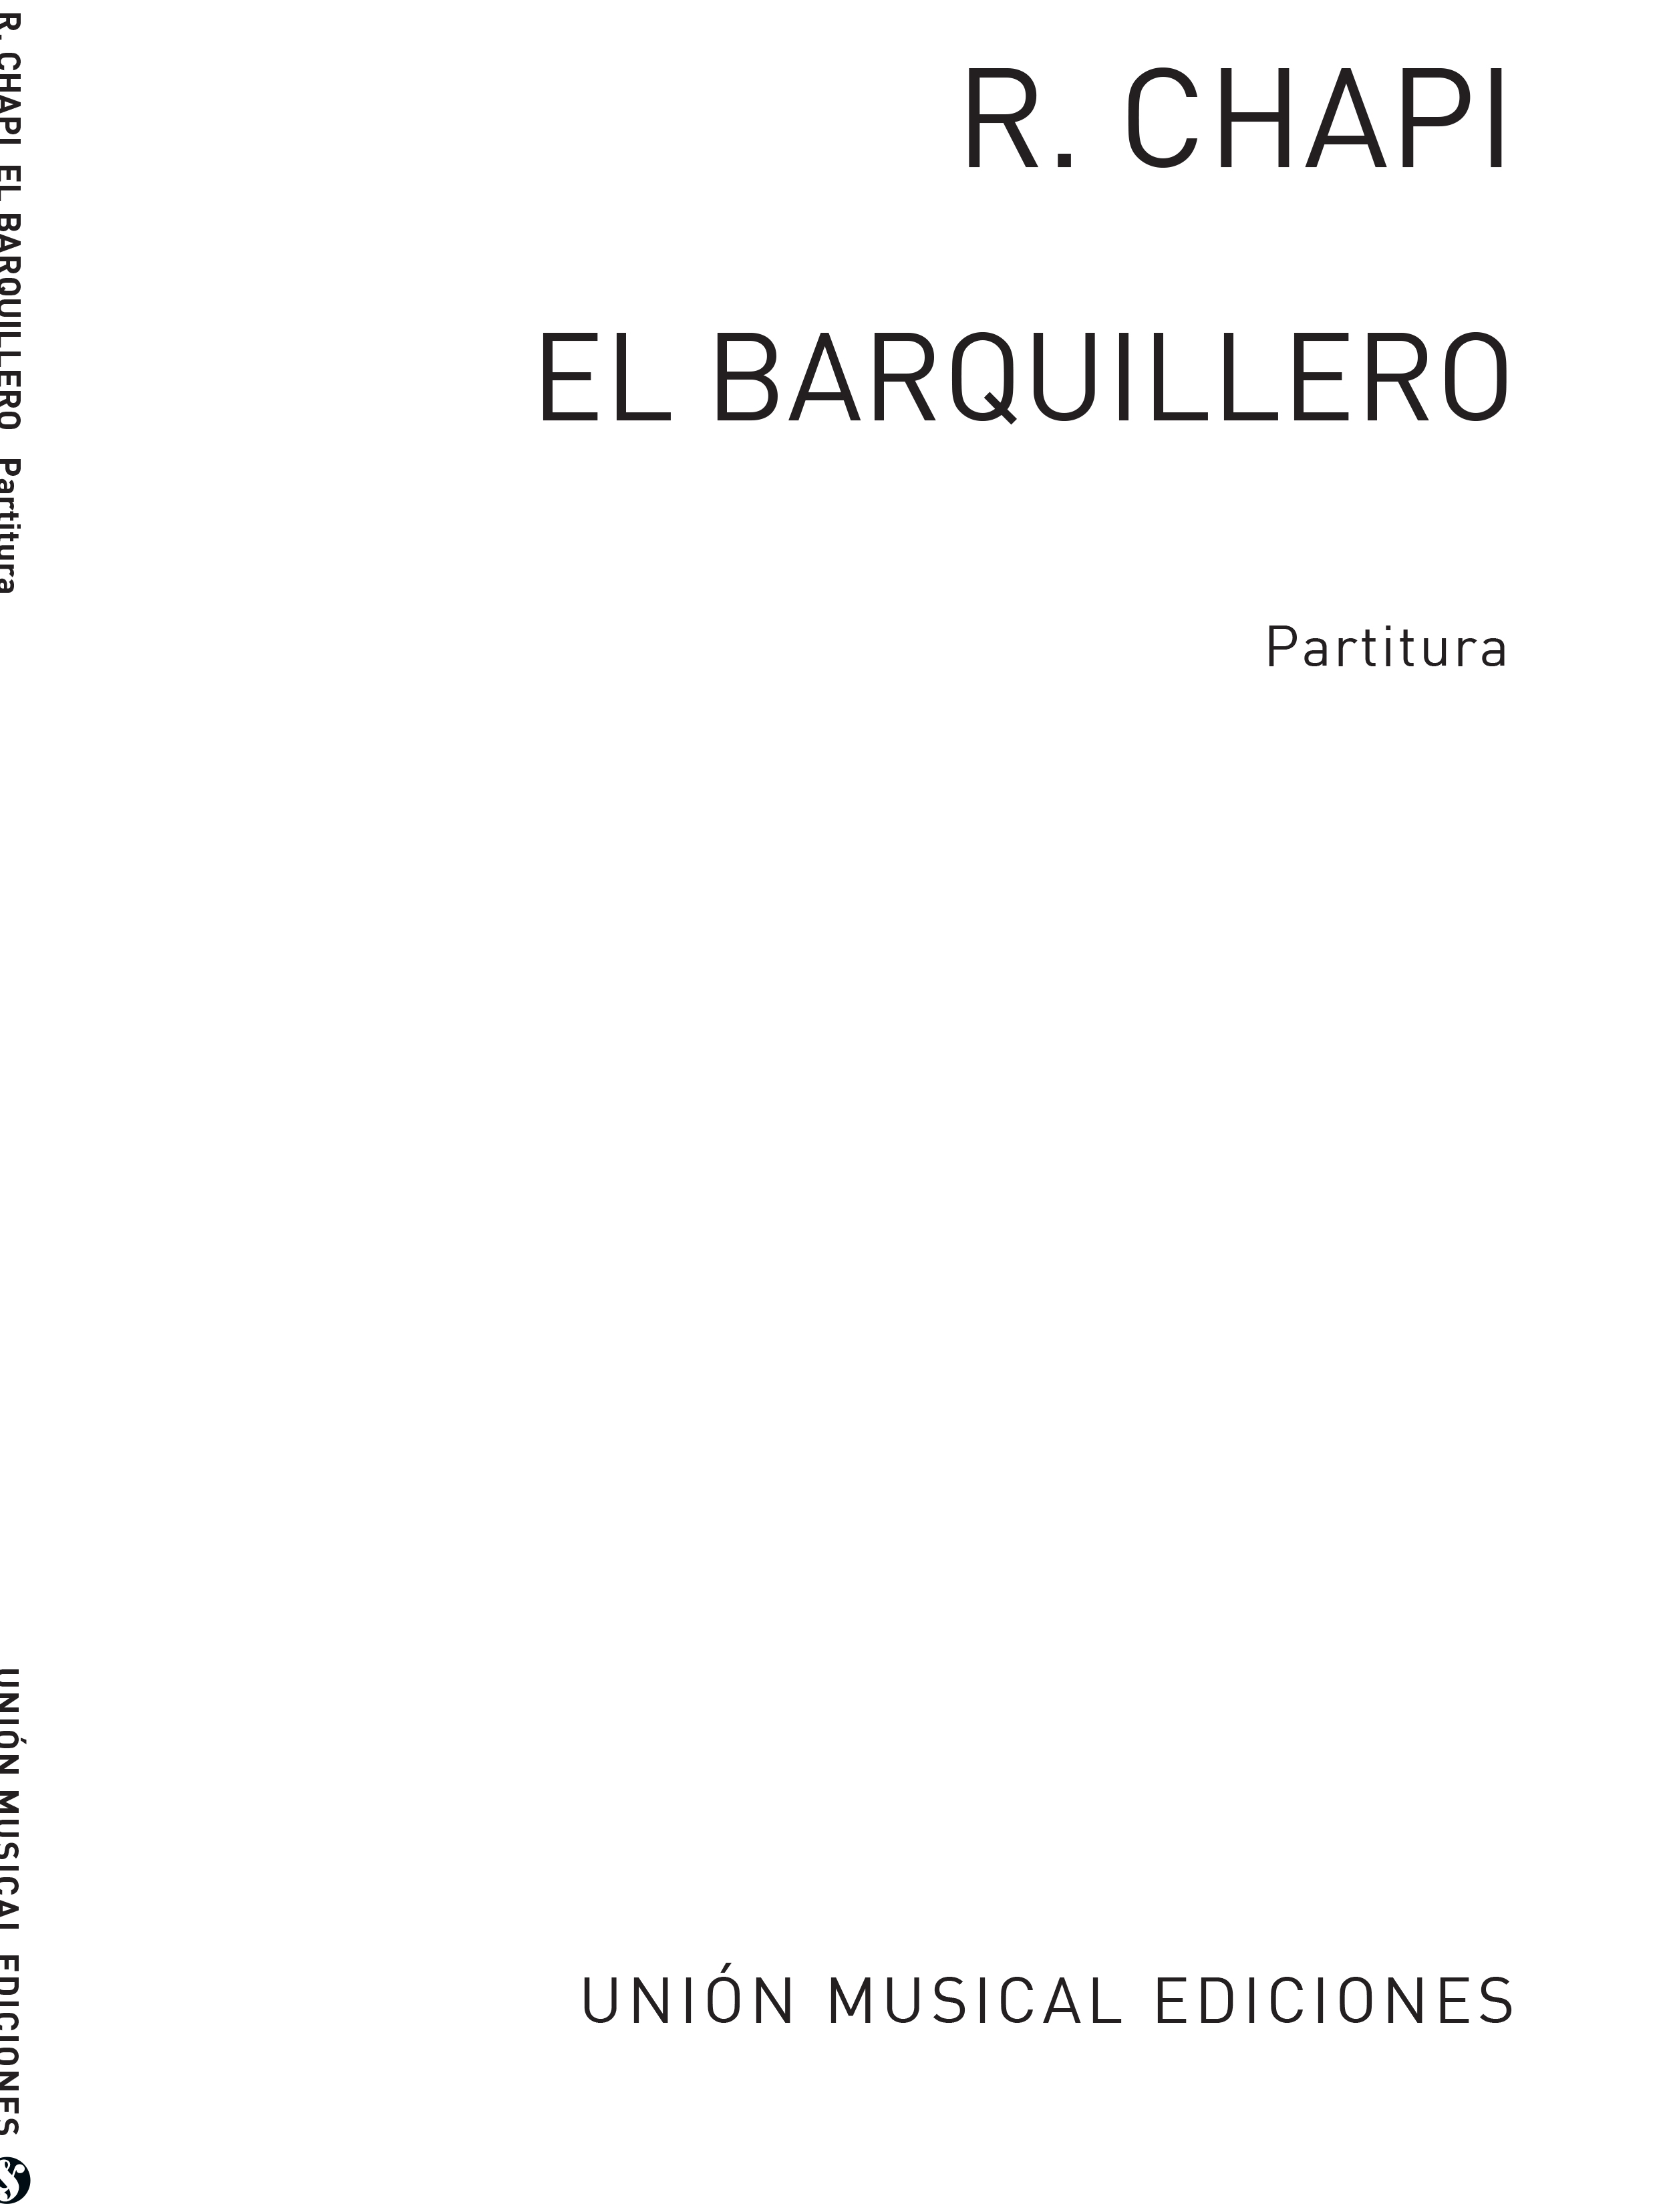 Ruperto Chapi: El Barqillero Partitura: Opera: Instrumental Work